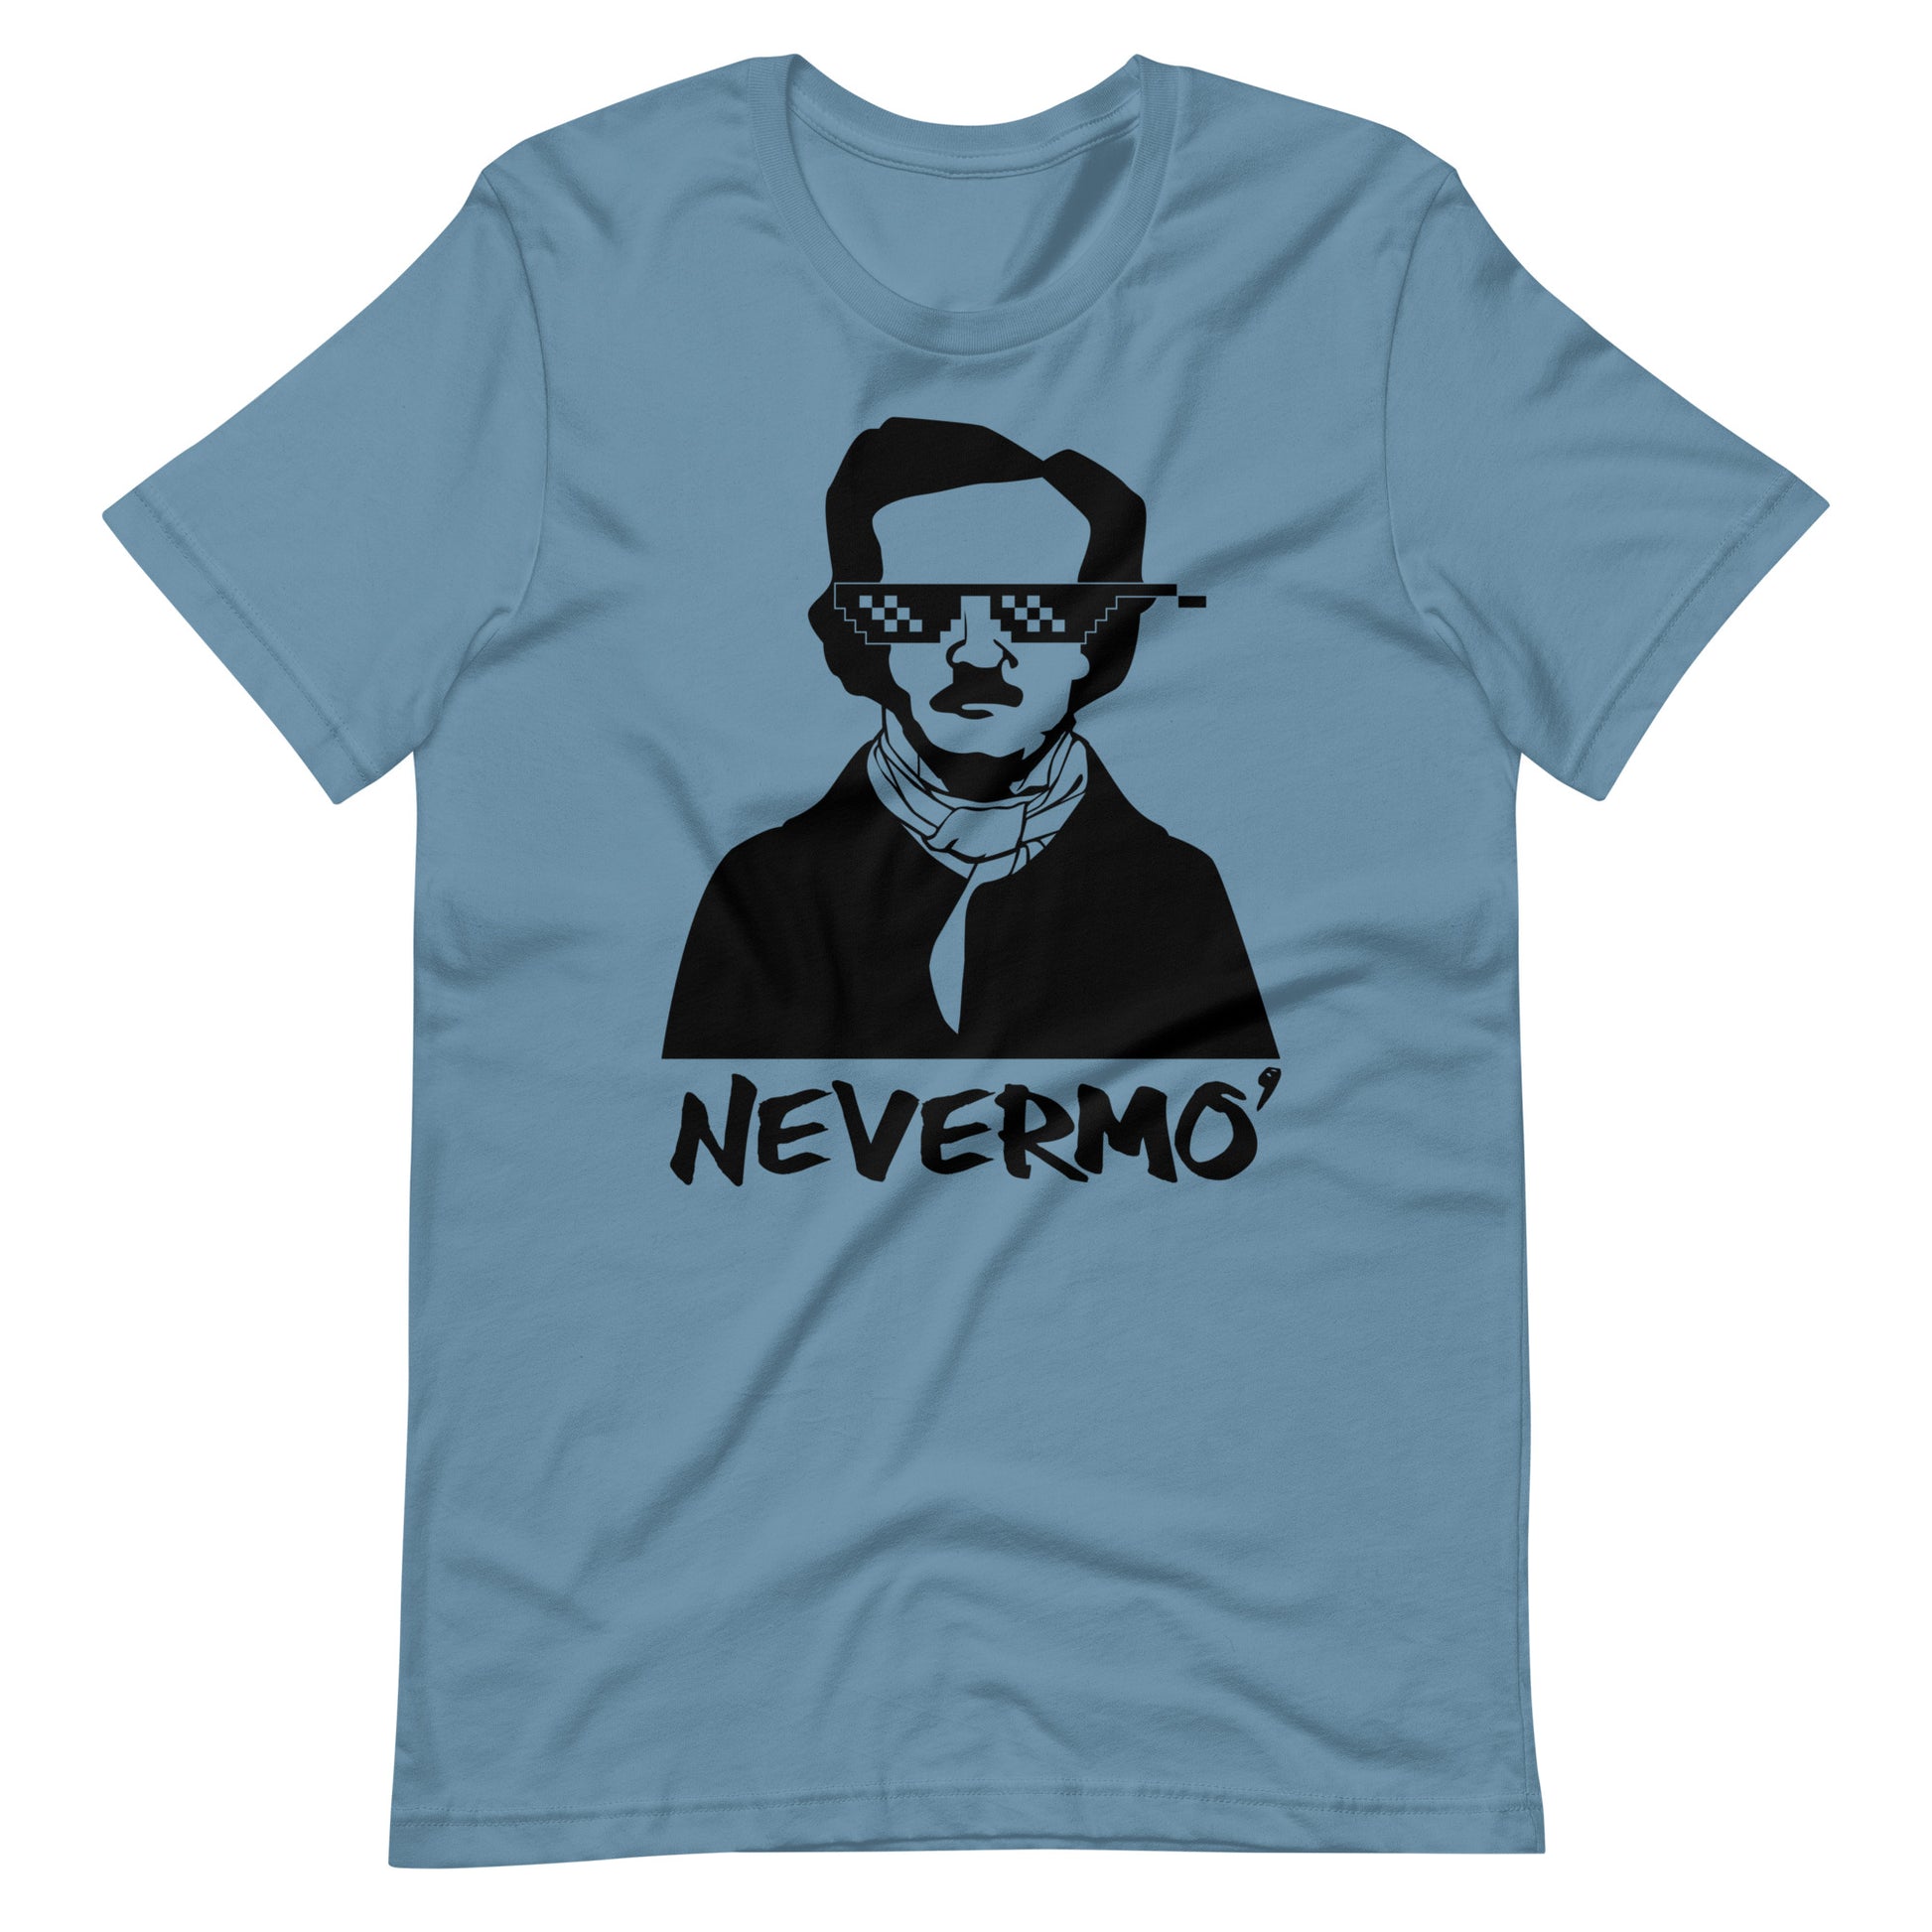 Men's Edgar Allan Poe "The Nevermo" T-Shirt - Steel Blue Front